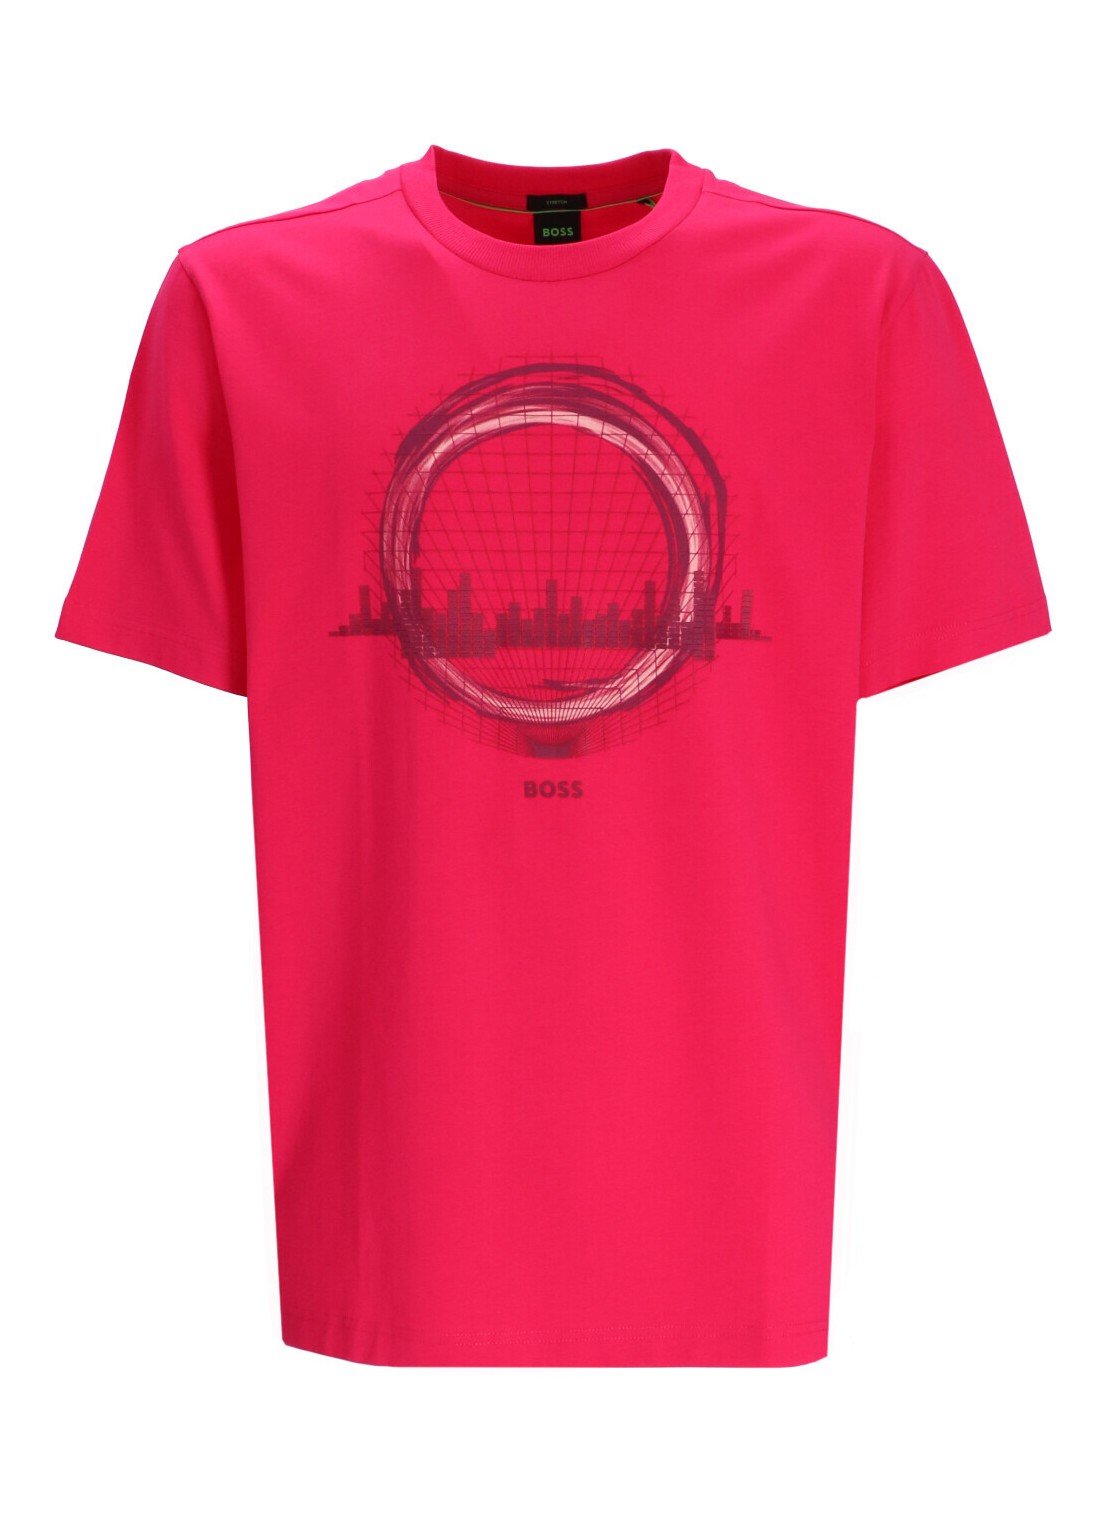 Camiseta boss t-shirt mantee 8 - 50506372 698 talla rosa
 